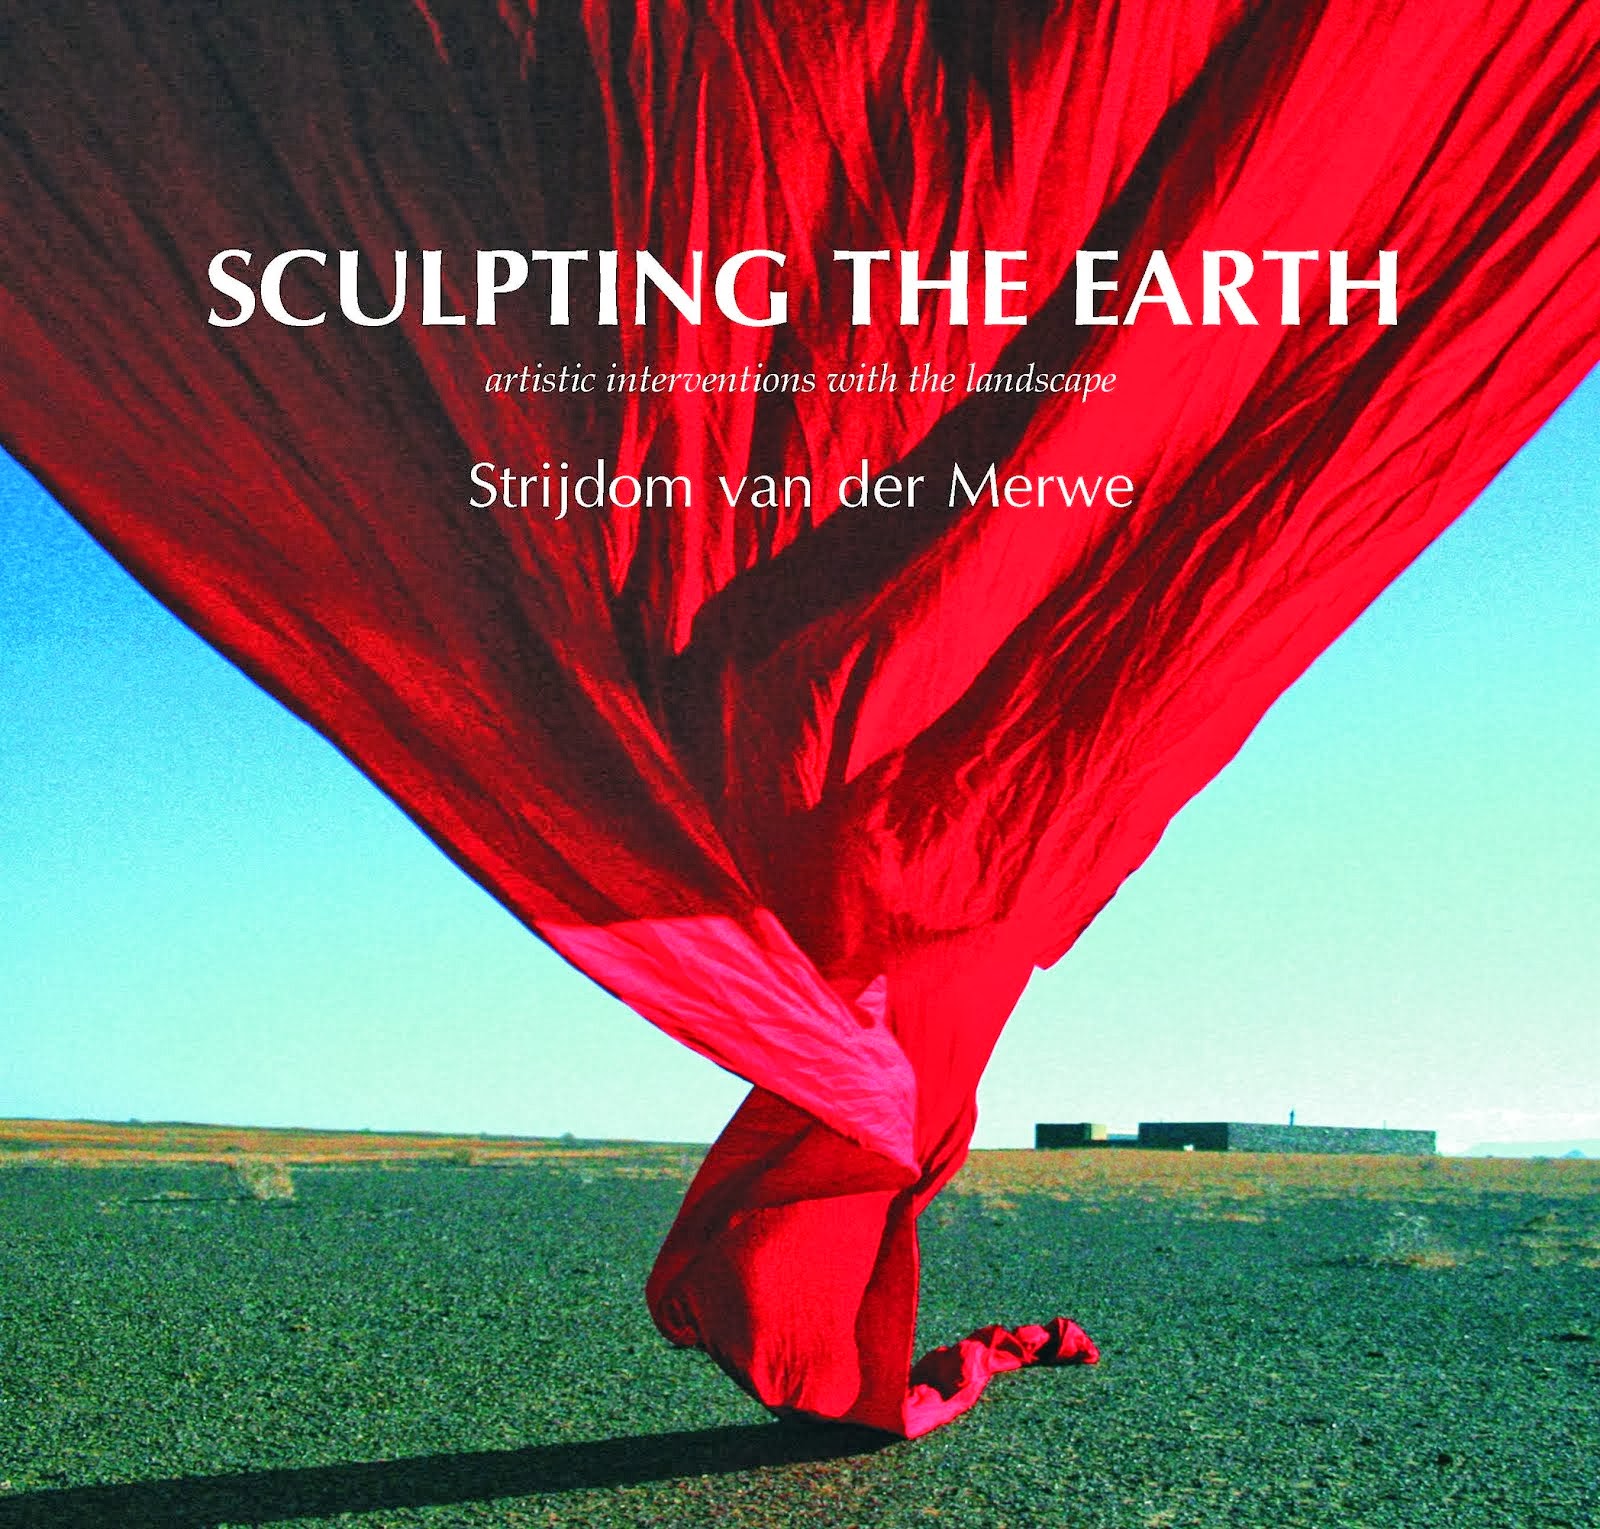 Sculpting the earth: Strijdom van der Merwe